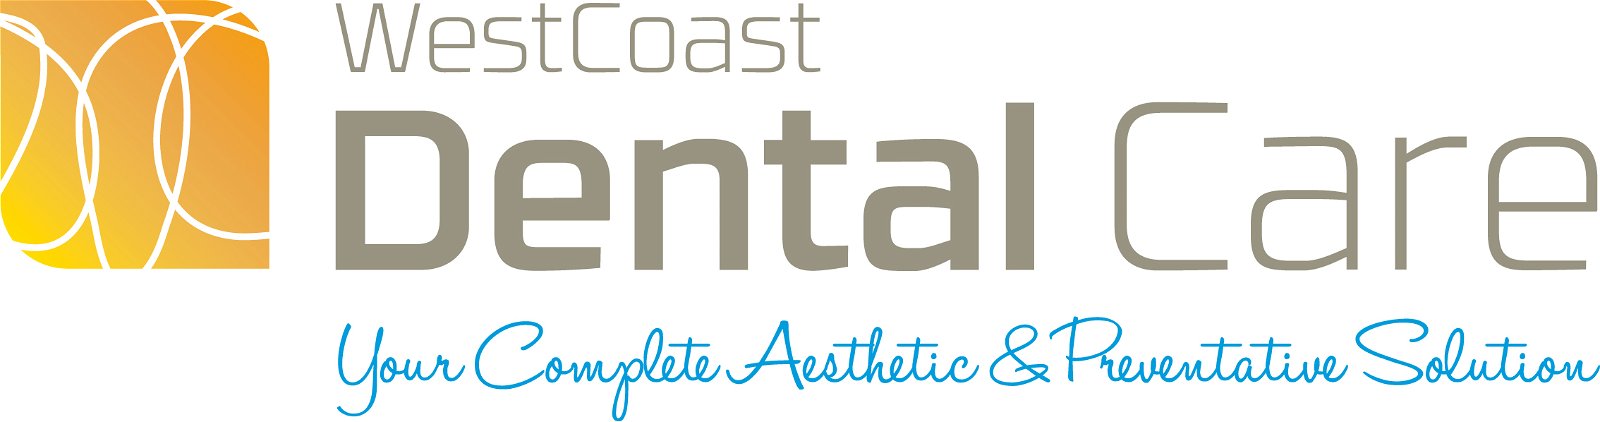 West Coast Dental Care - Dentists Hobart 0